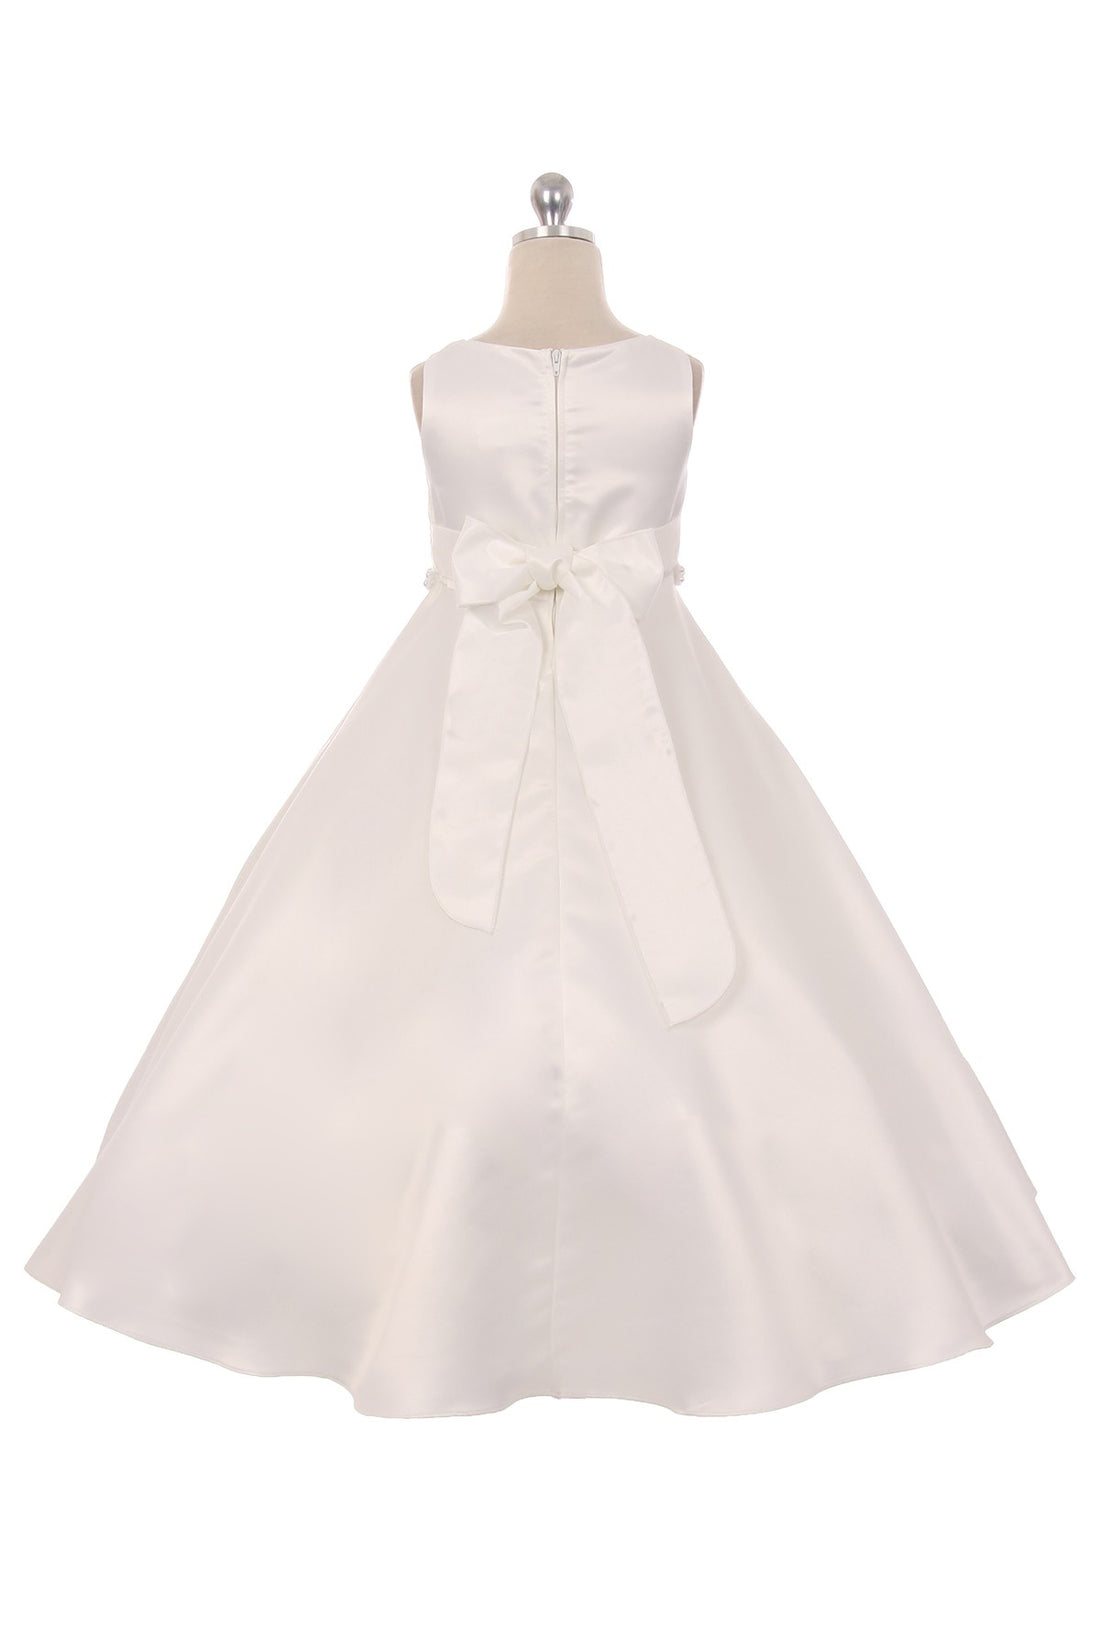 Flower Girl Party Long Satin Pearl Trim Communion Dress by AS386 Kids Dream - Girl Formal Dresses